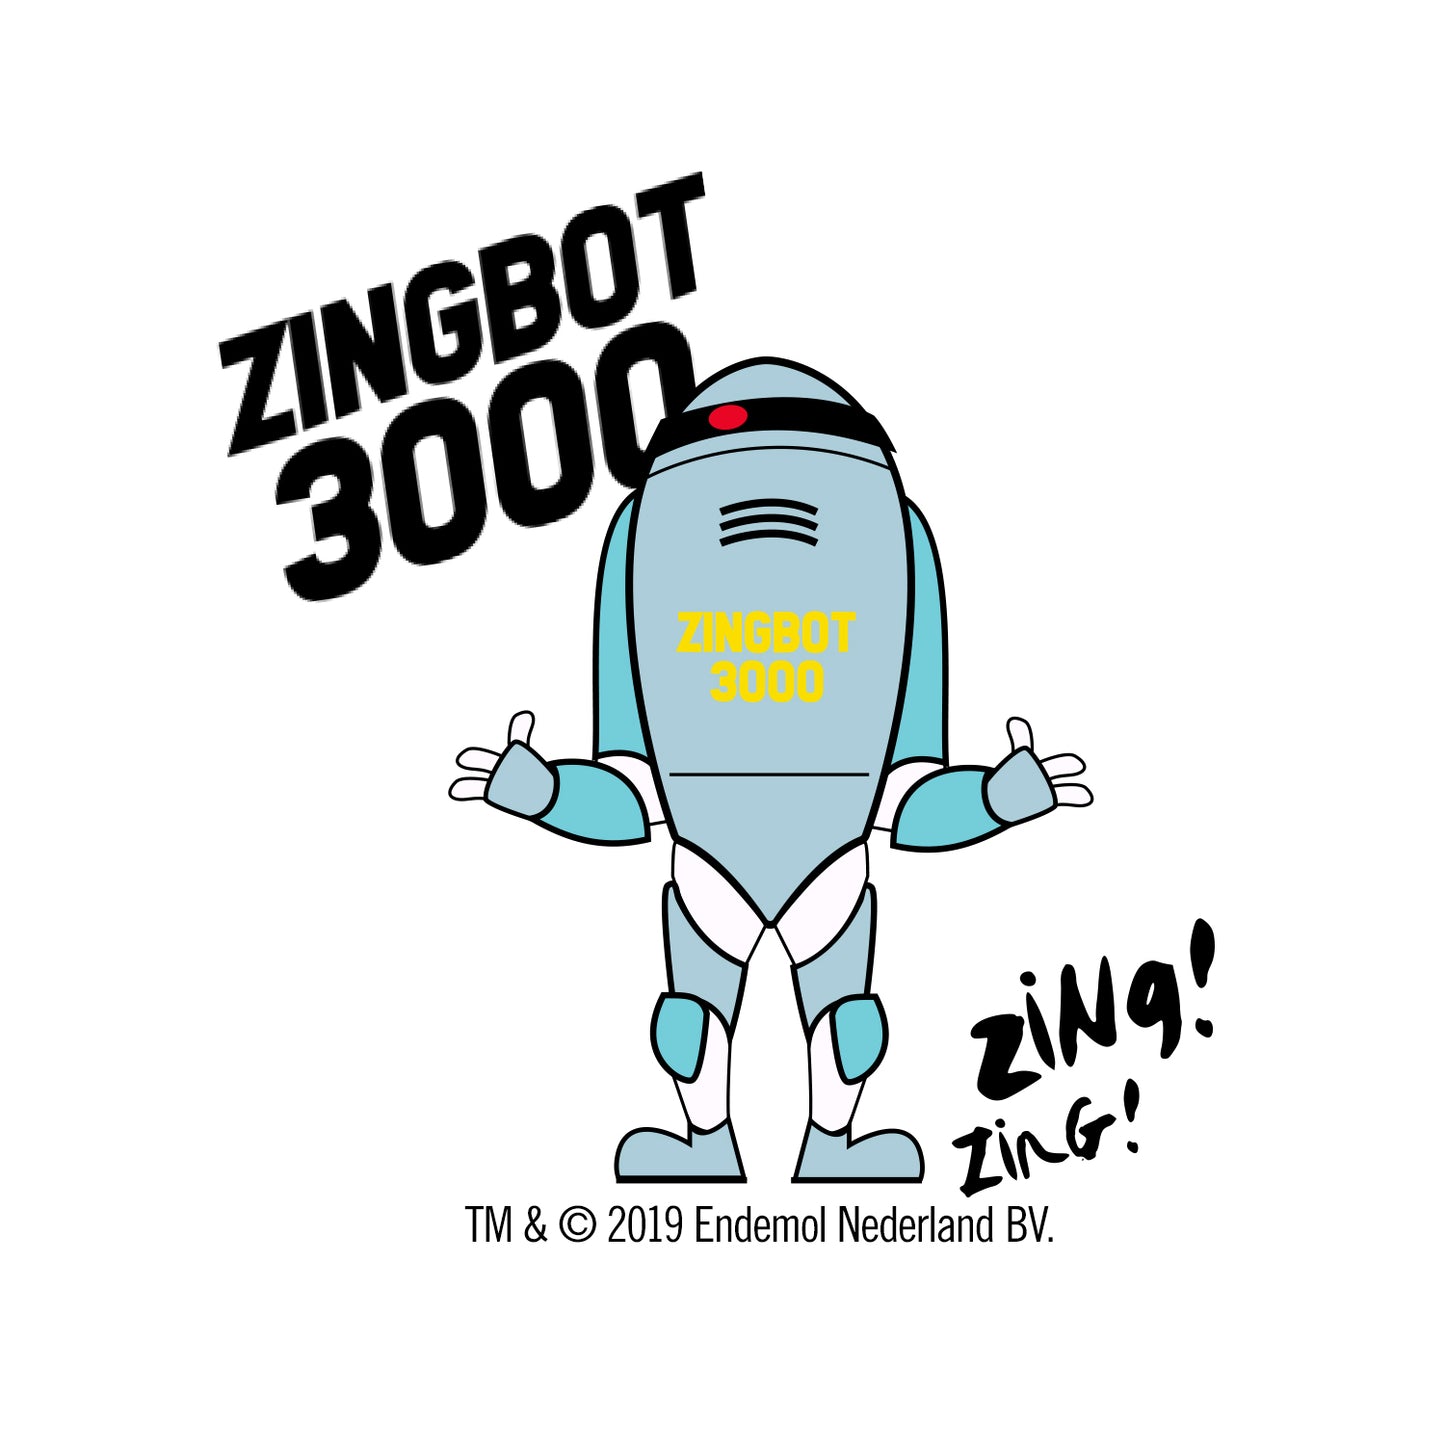 Big Brother Zingbot 3000 White Mug